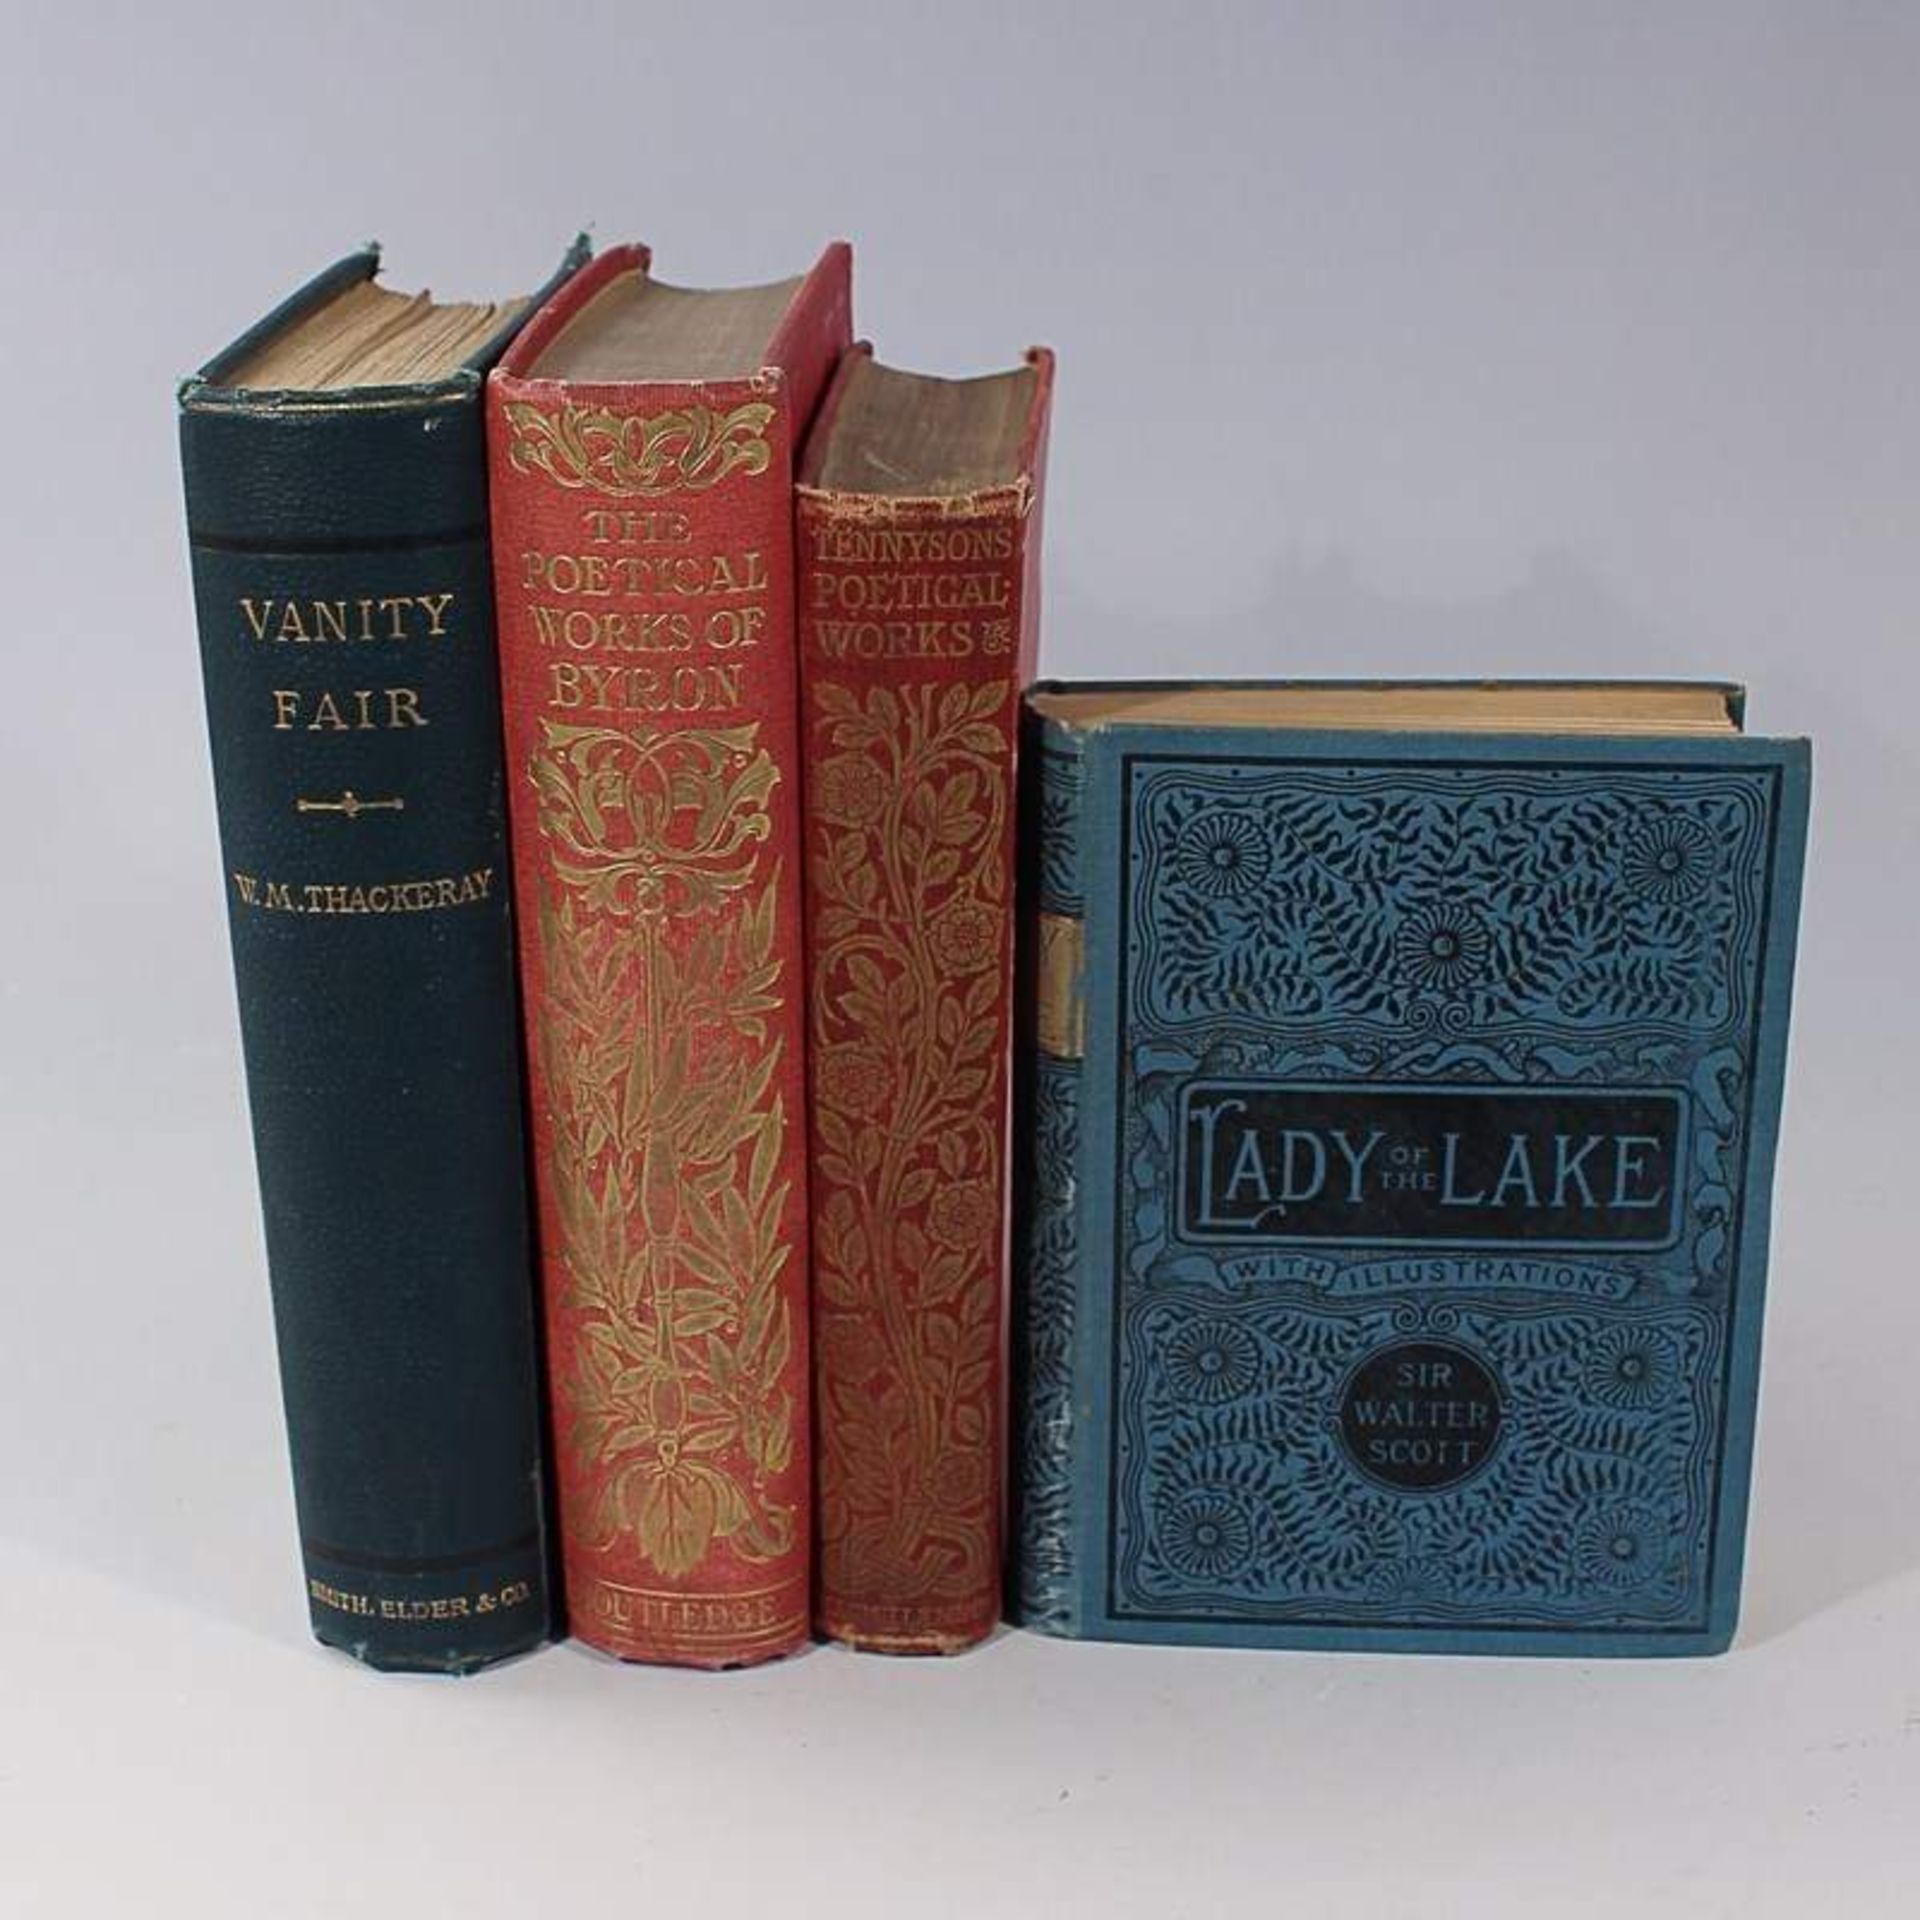 Englische Literatur - Konvolut 4 St., Scott, Sir Walter, Lady of the Lake, 1885, Poetical Works of